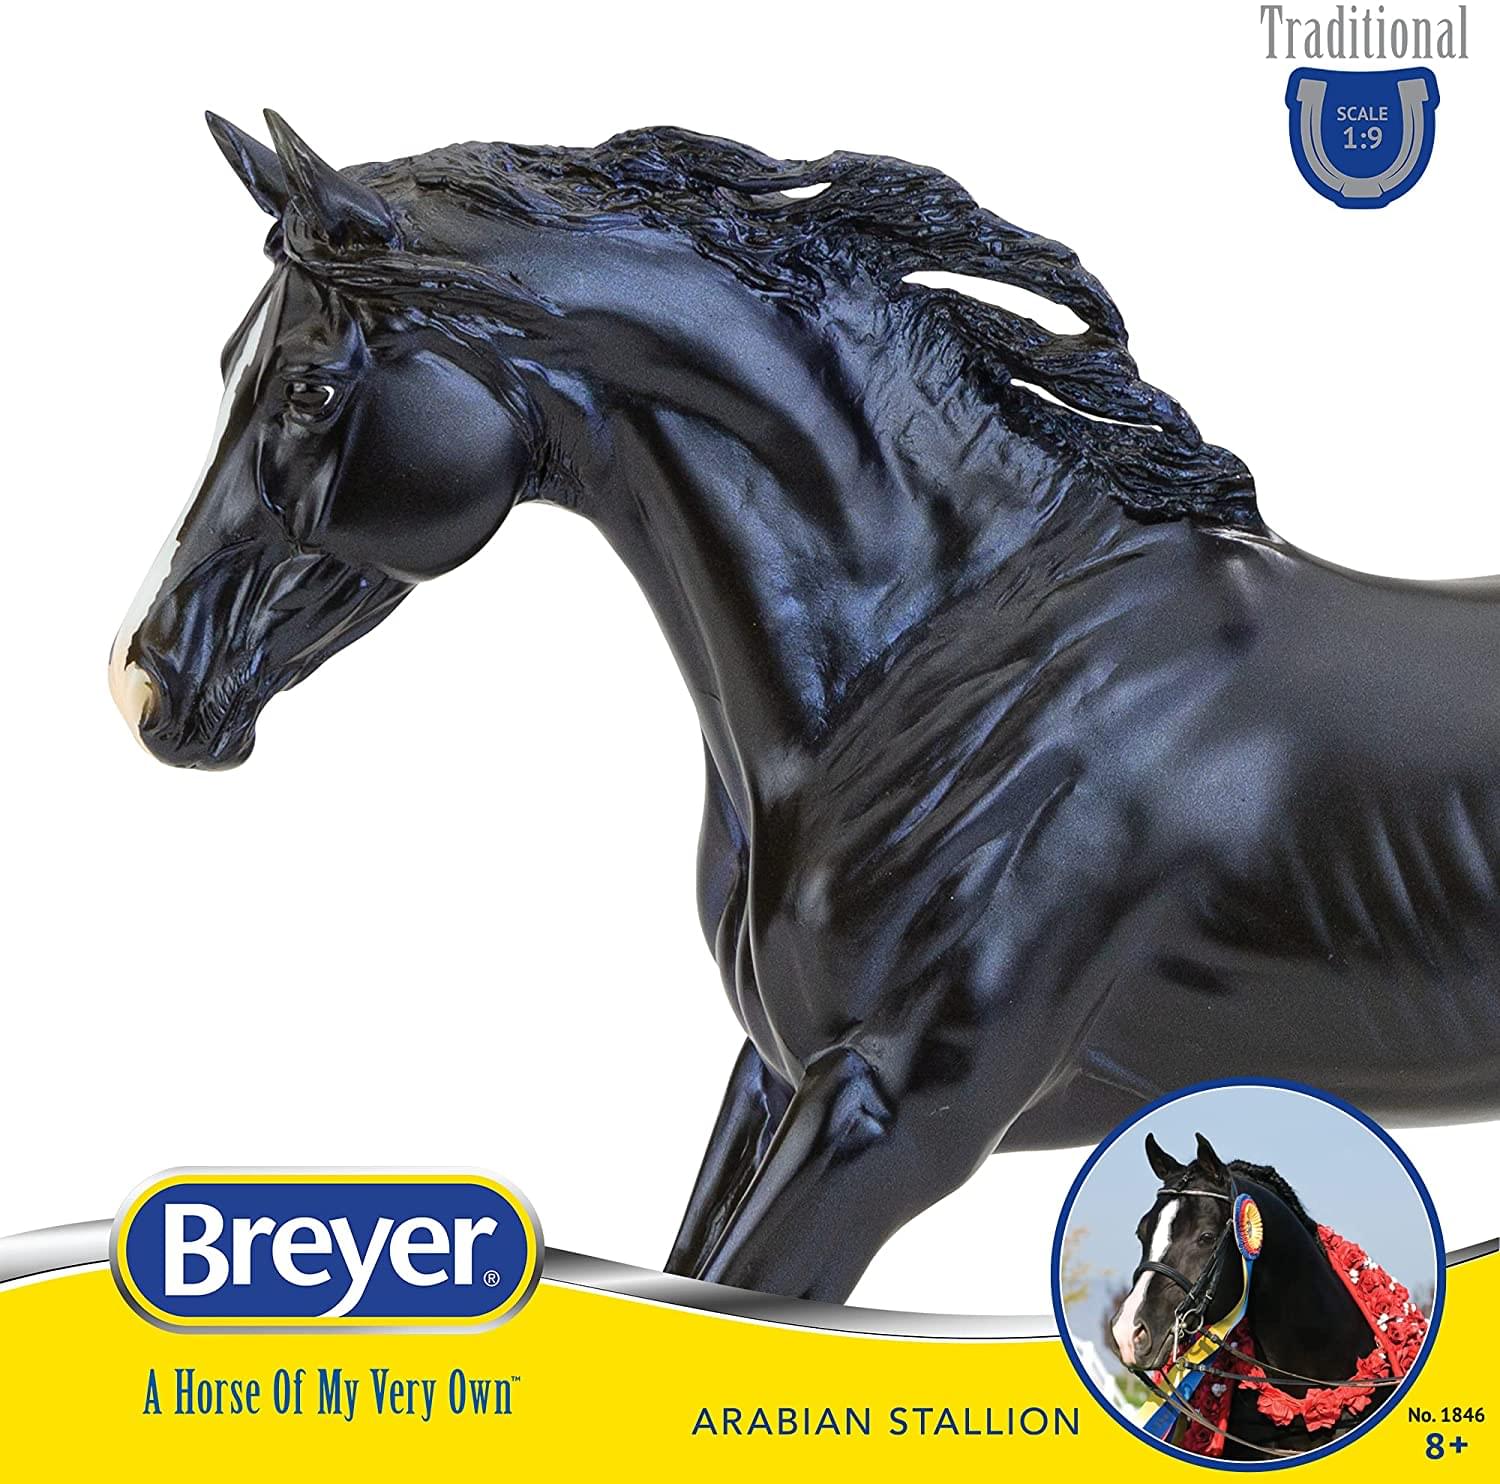 Breyer Traditional 1:9 Scale Model Horse | KB Omega Fahim